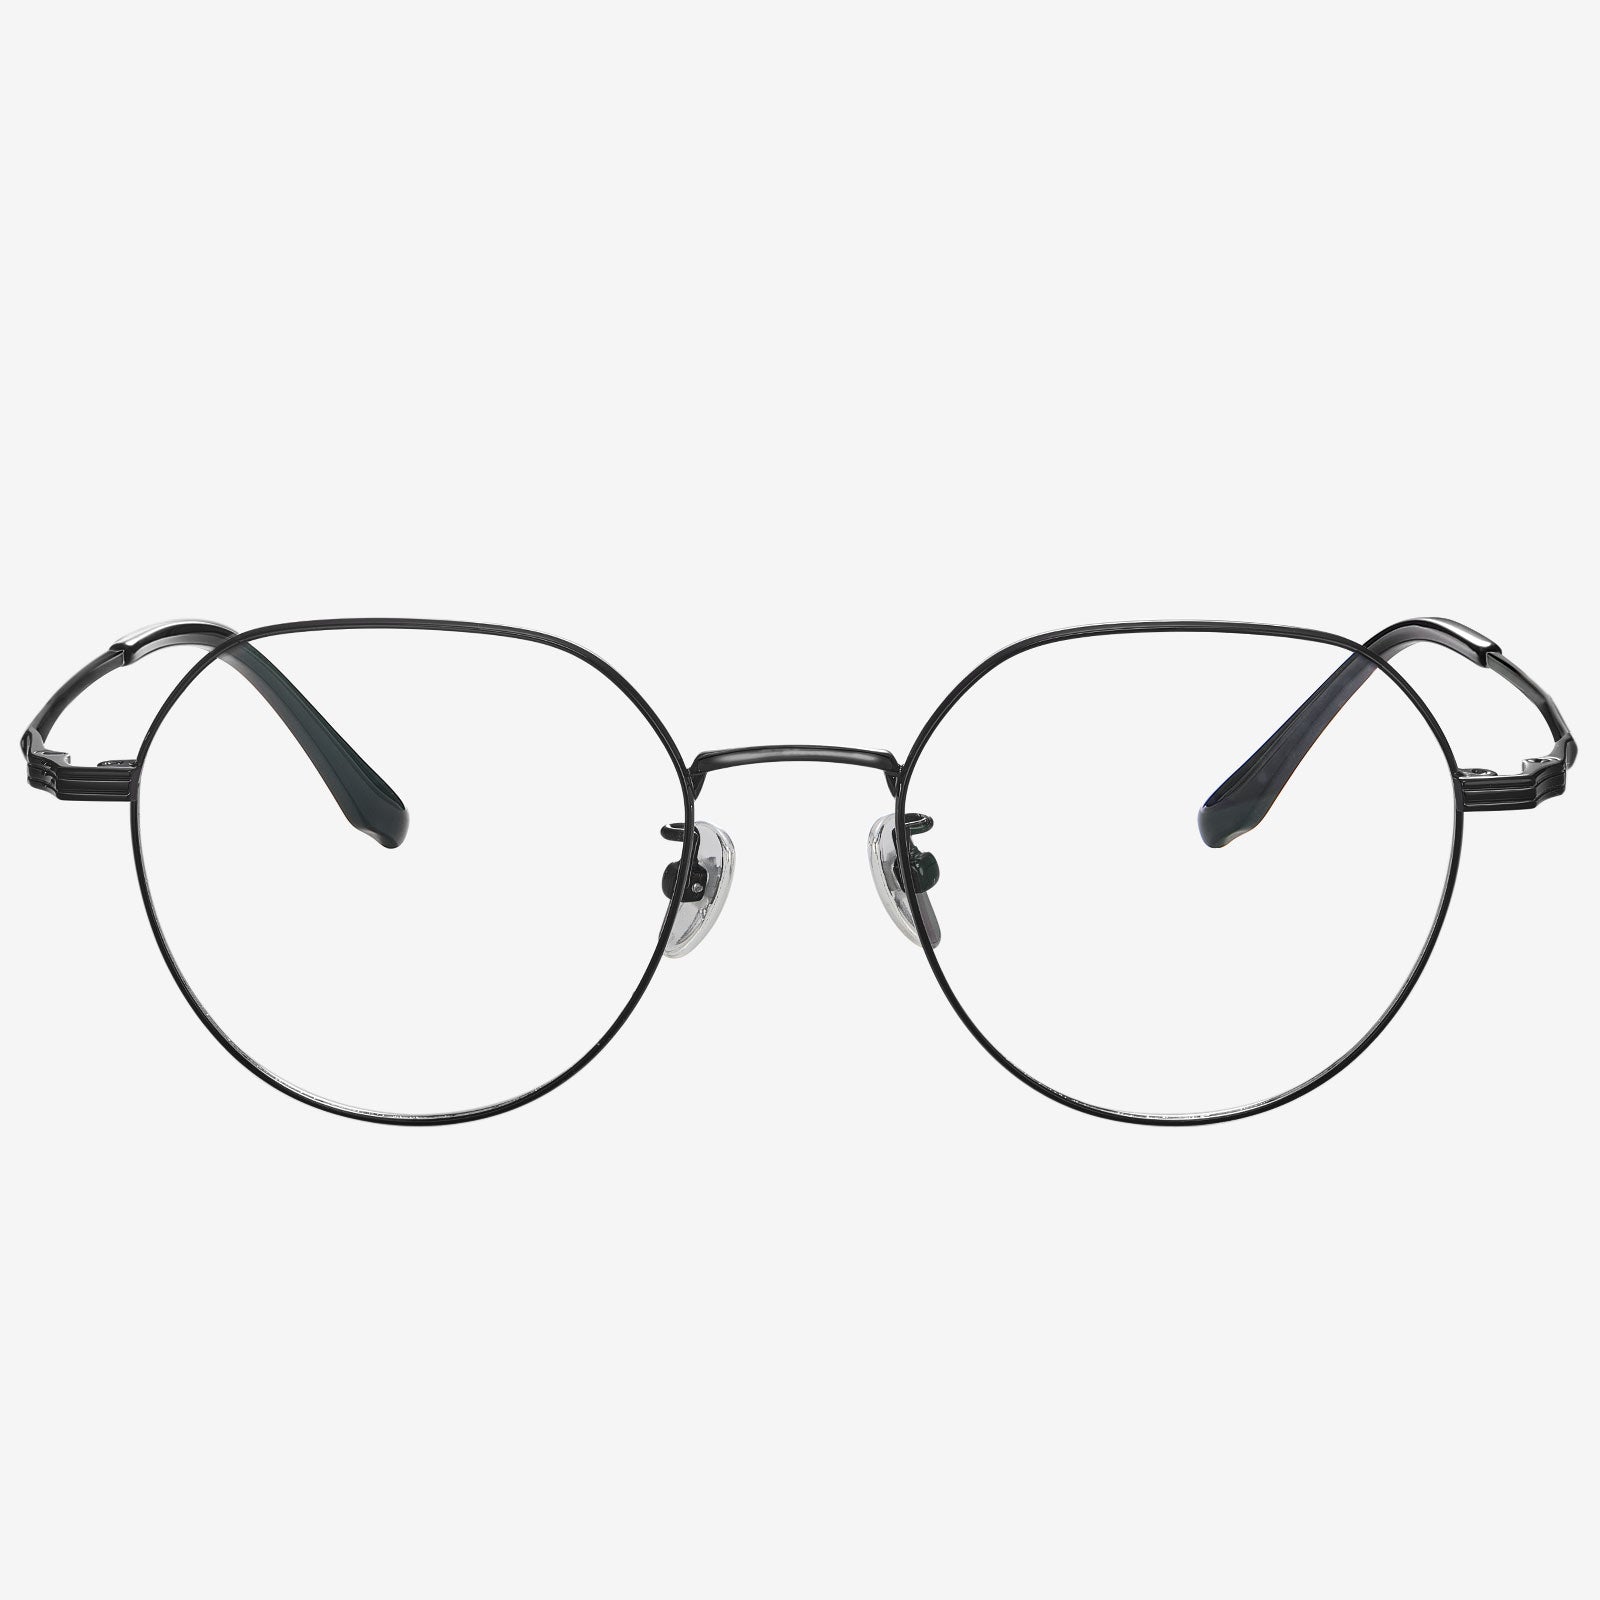 Titanium Glasses Frames | The Most Durable Frame | KOALAEYE